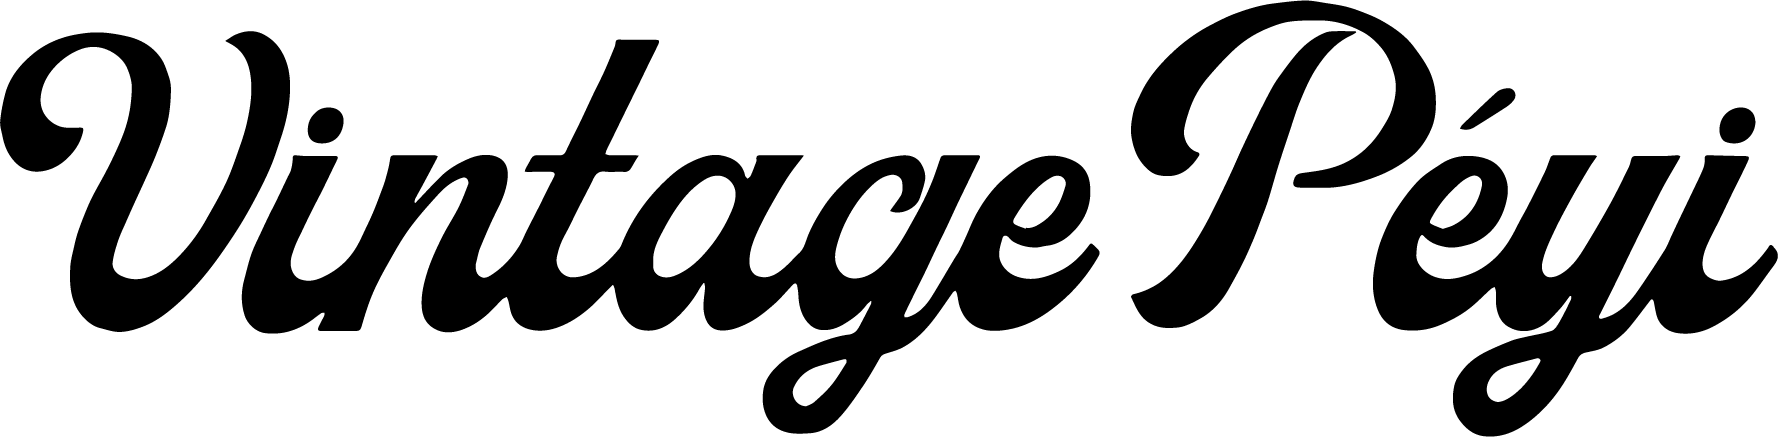 logo de vintage péyi